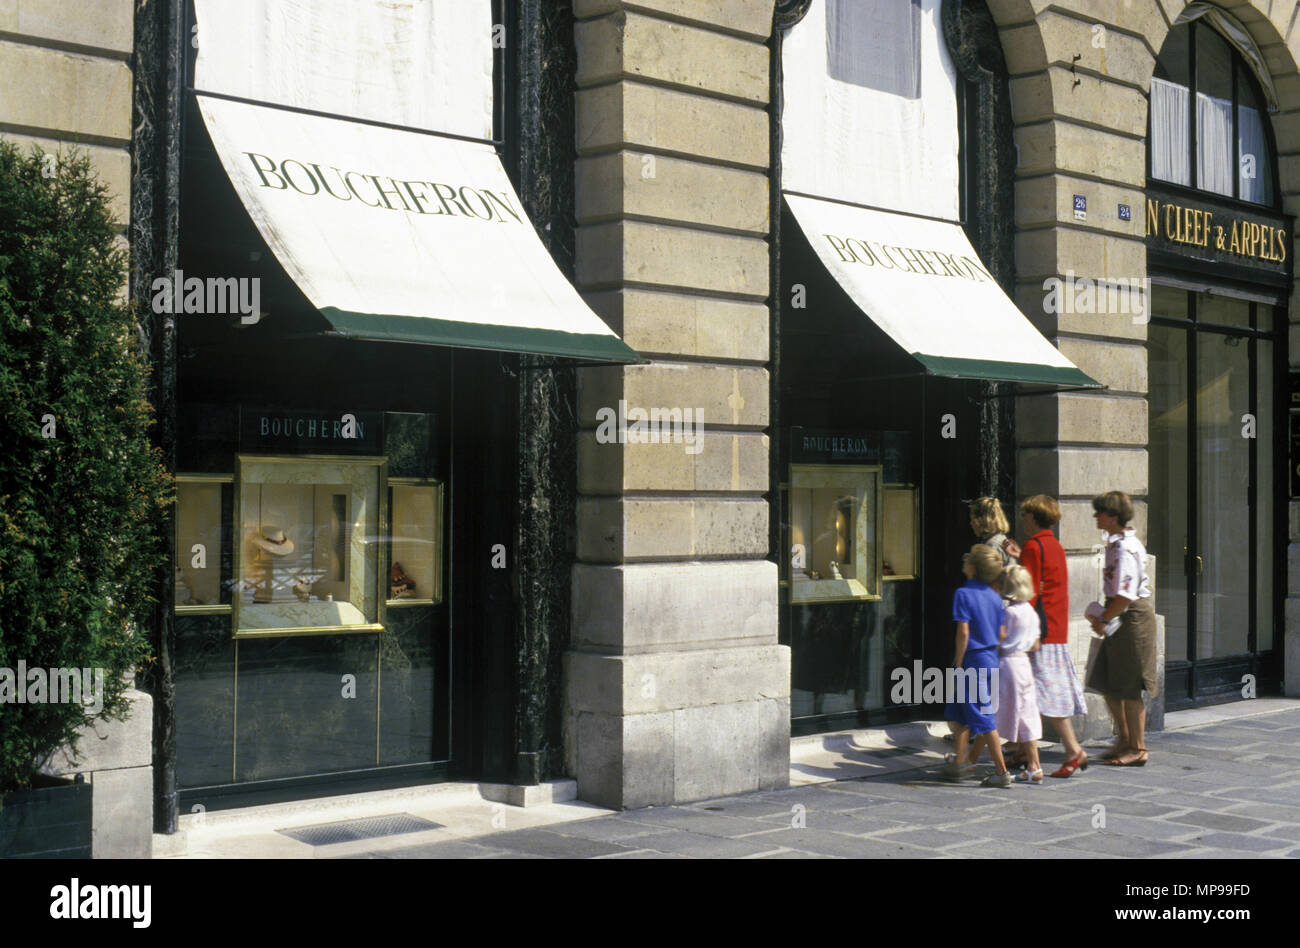 1988 HISTORICAL BOUCHERON JEWELERS PLACE VENDOME PARIS FRANCE Stock Photo